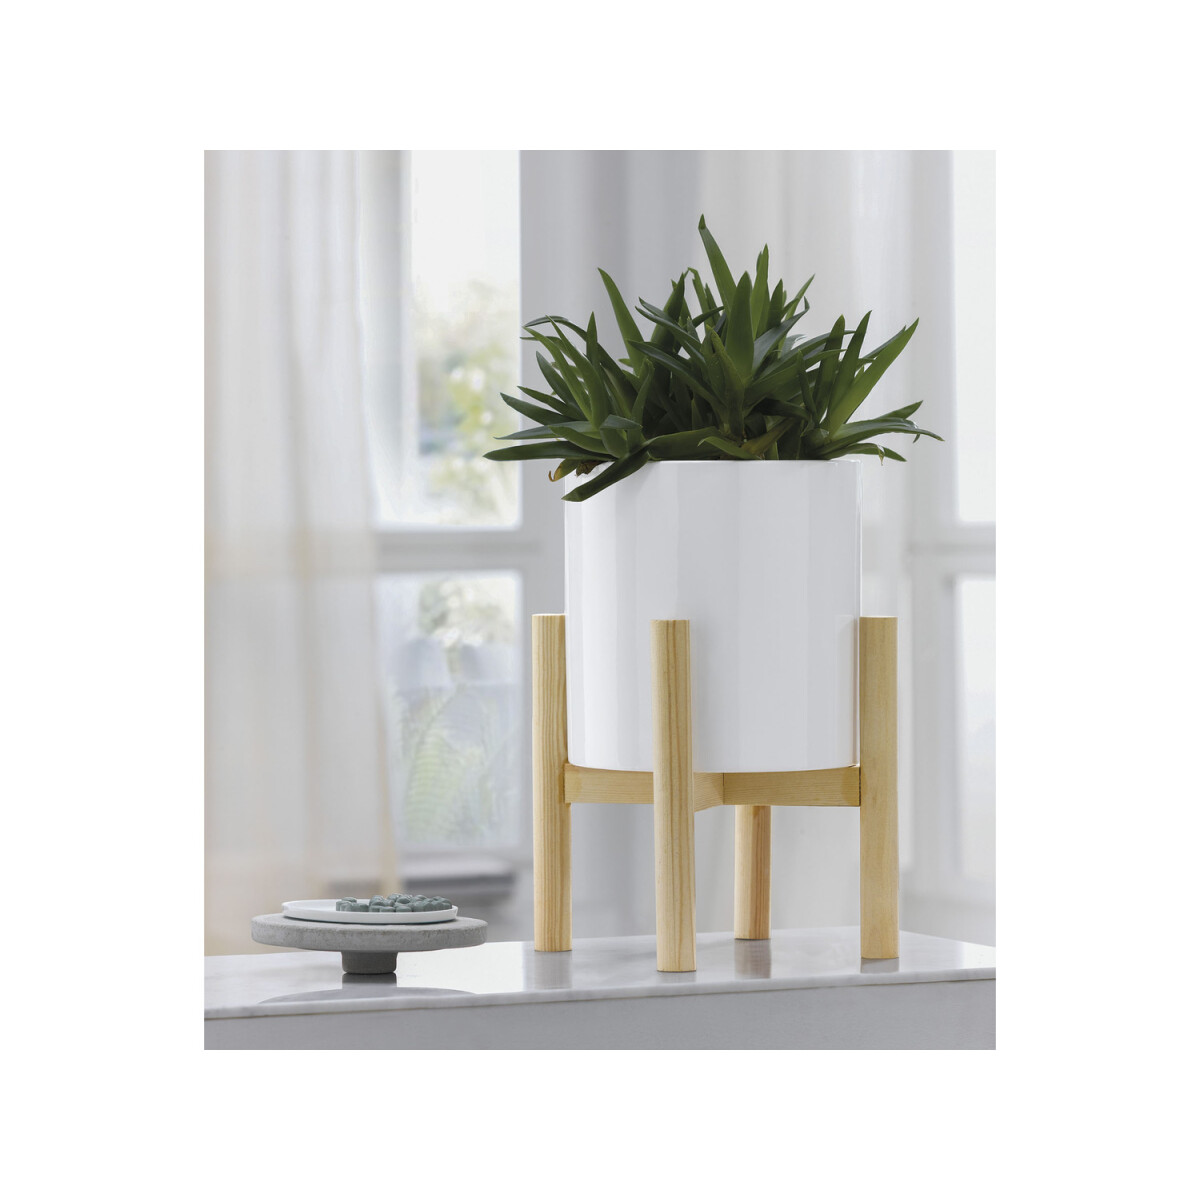 LIVARNO home Übertopf mit Gestell, aus Keramik und Kiefernholz (weiß) -  B-Ware neuwertig, 13,99 €